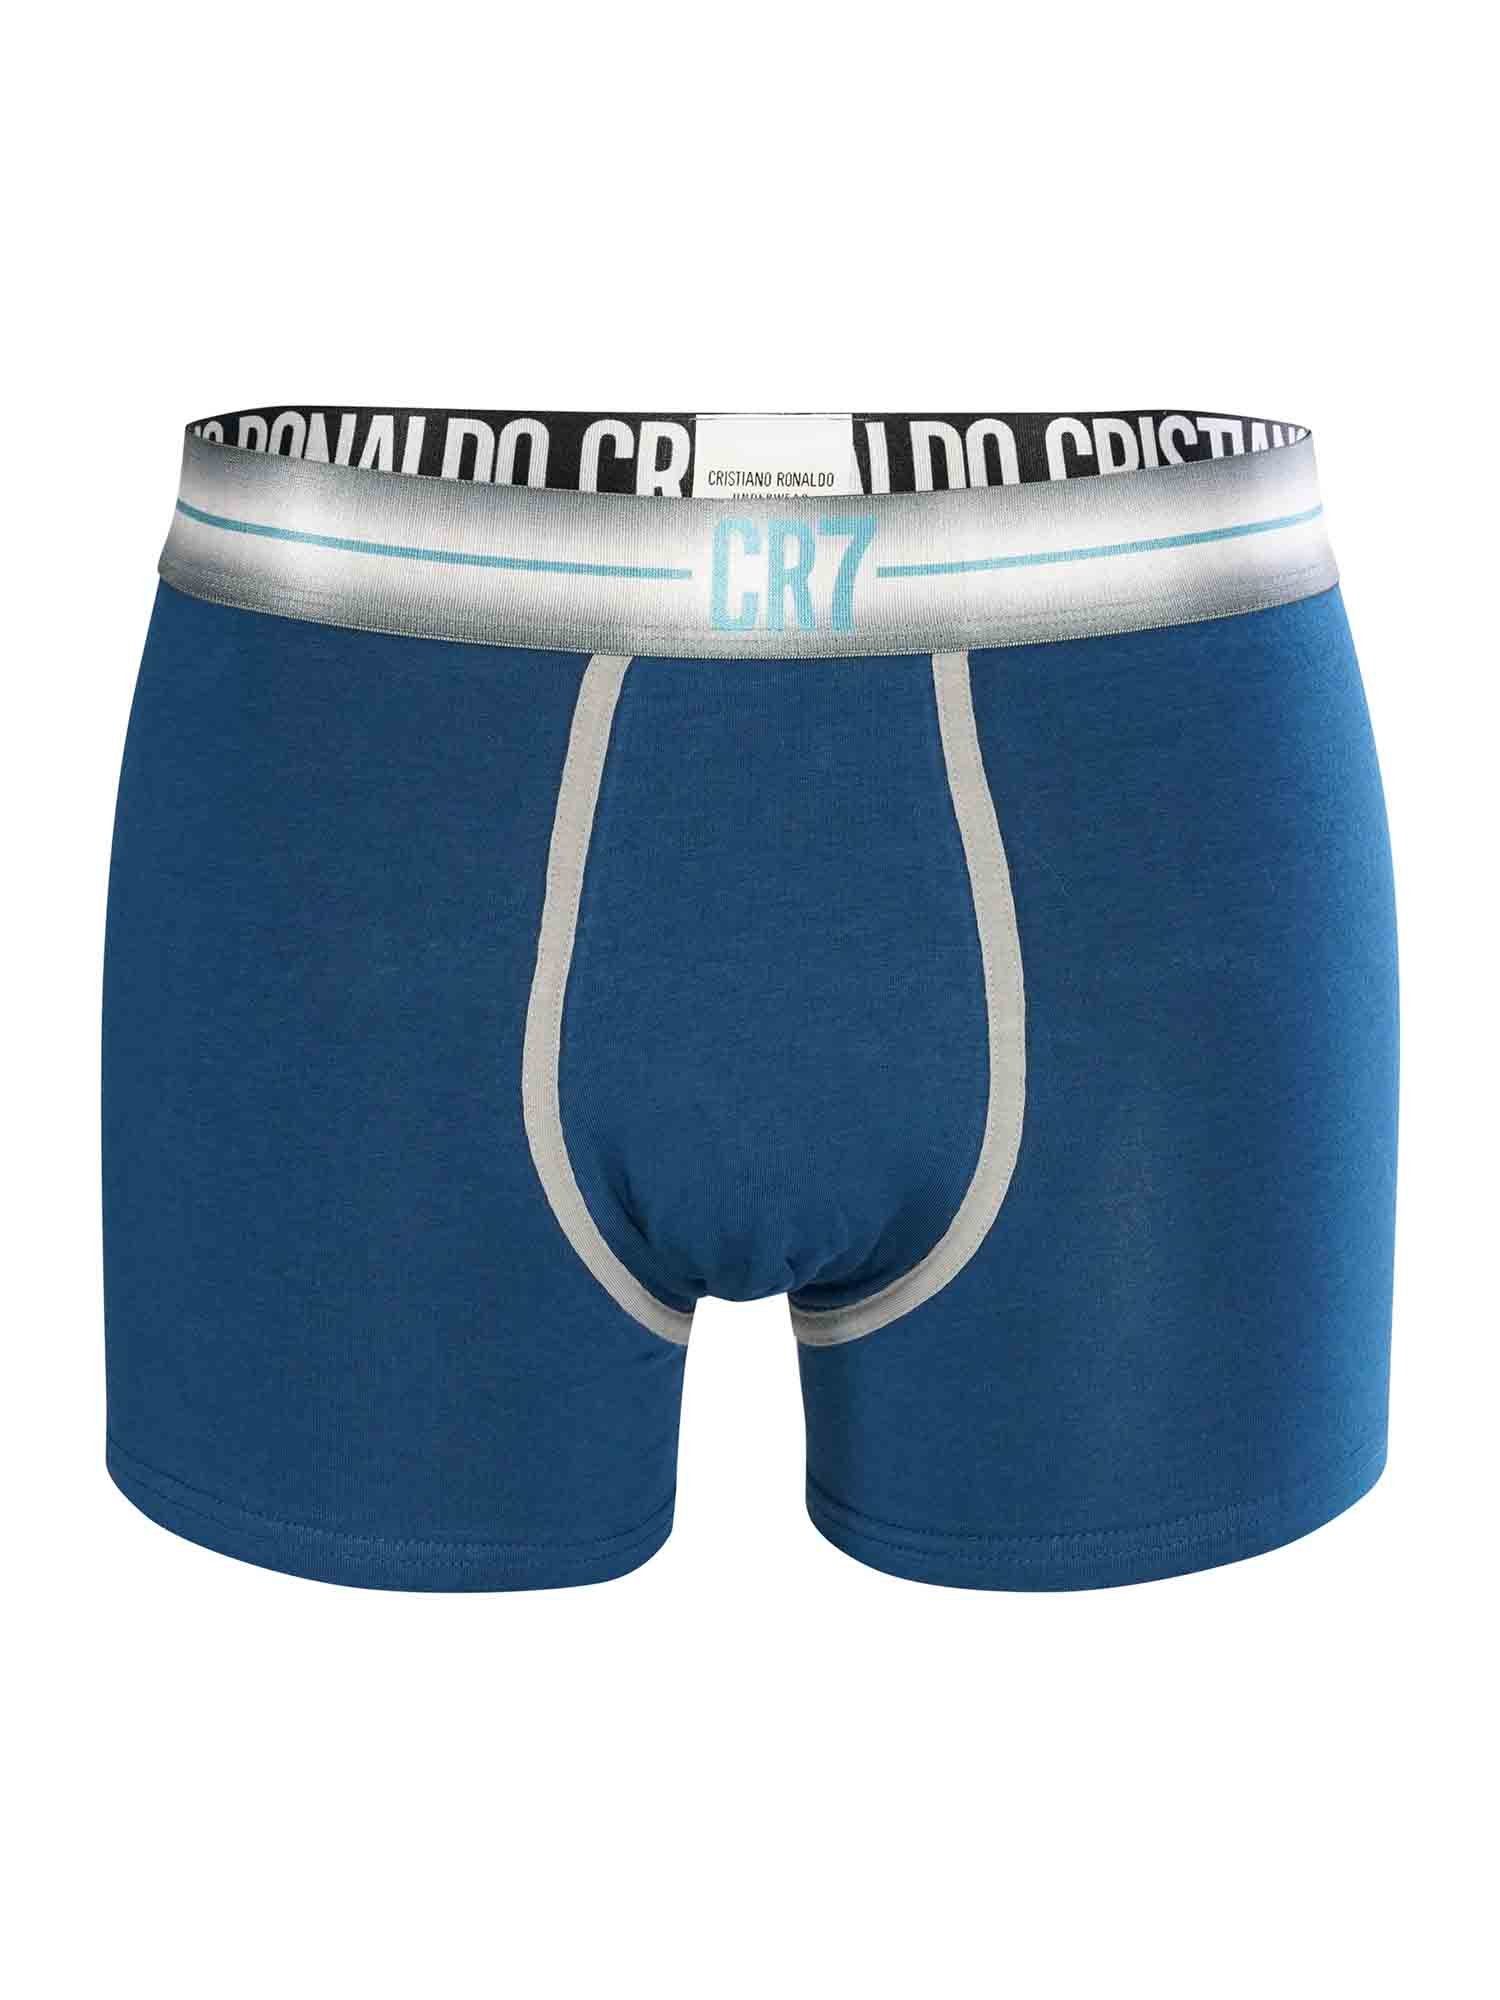 CR7 Retro Pants Multi Pants 9 Herren Trunks (2-St) Männer Boxershorts Multipack Retro